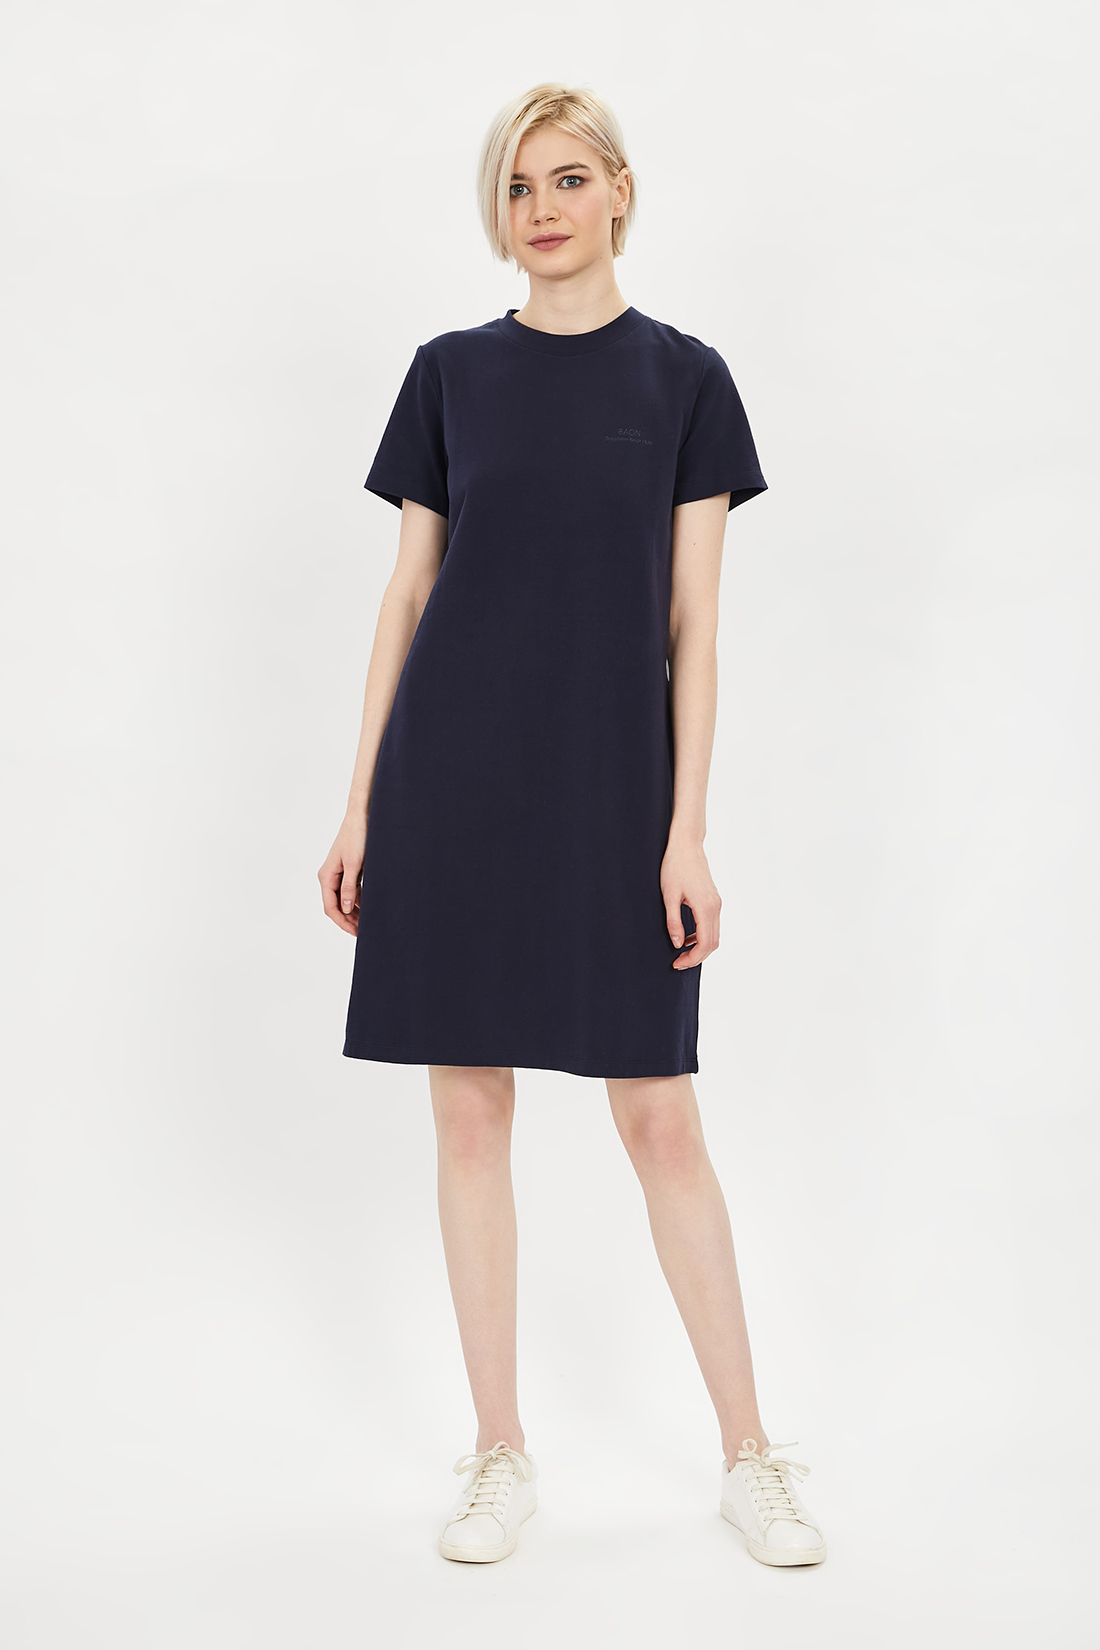 фото Платье-футболка женское baon b451033 синее xs